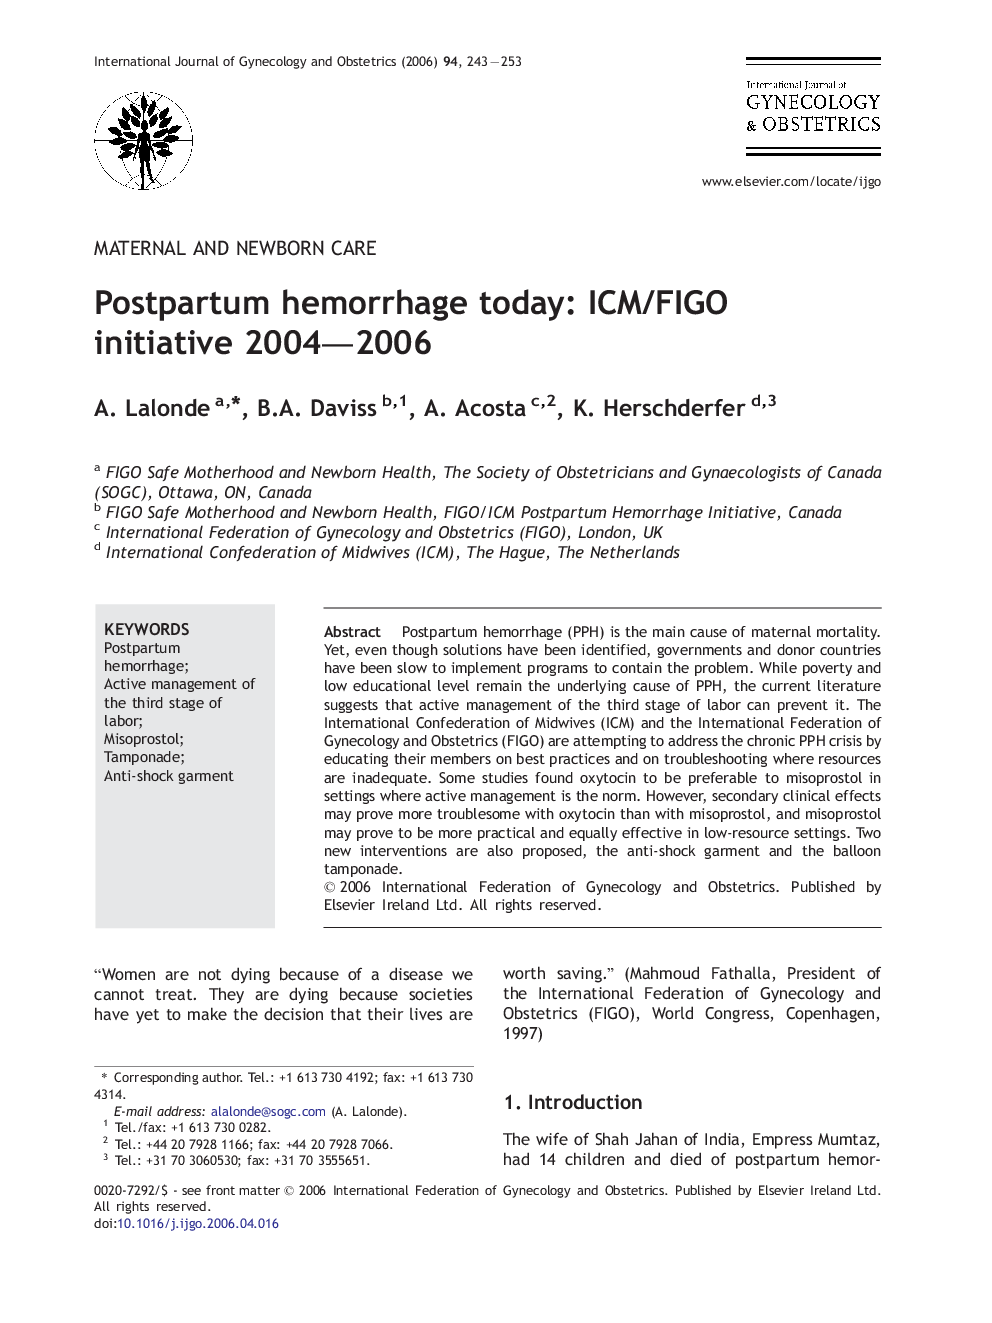 Postpartum hemorrhage today: ICM/FIGO initiative 2004–2006